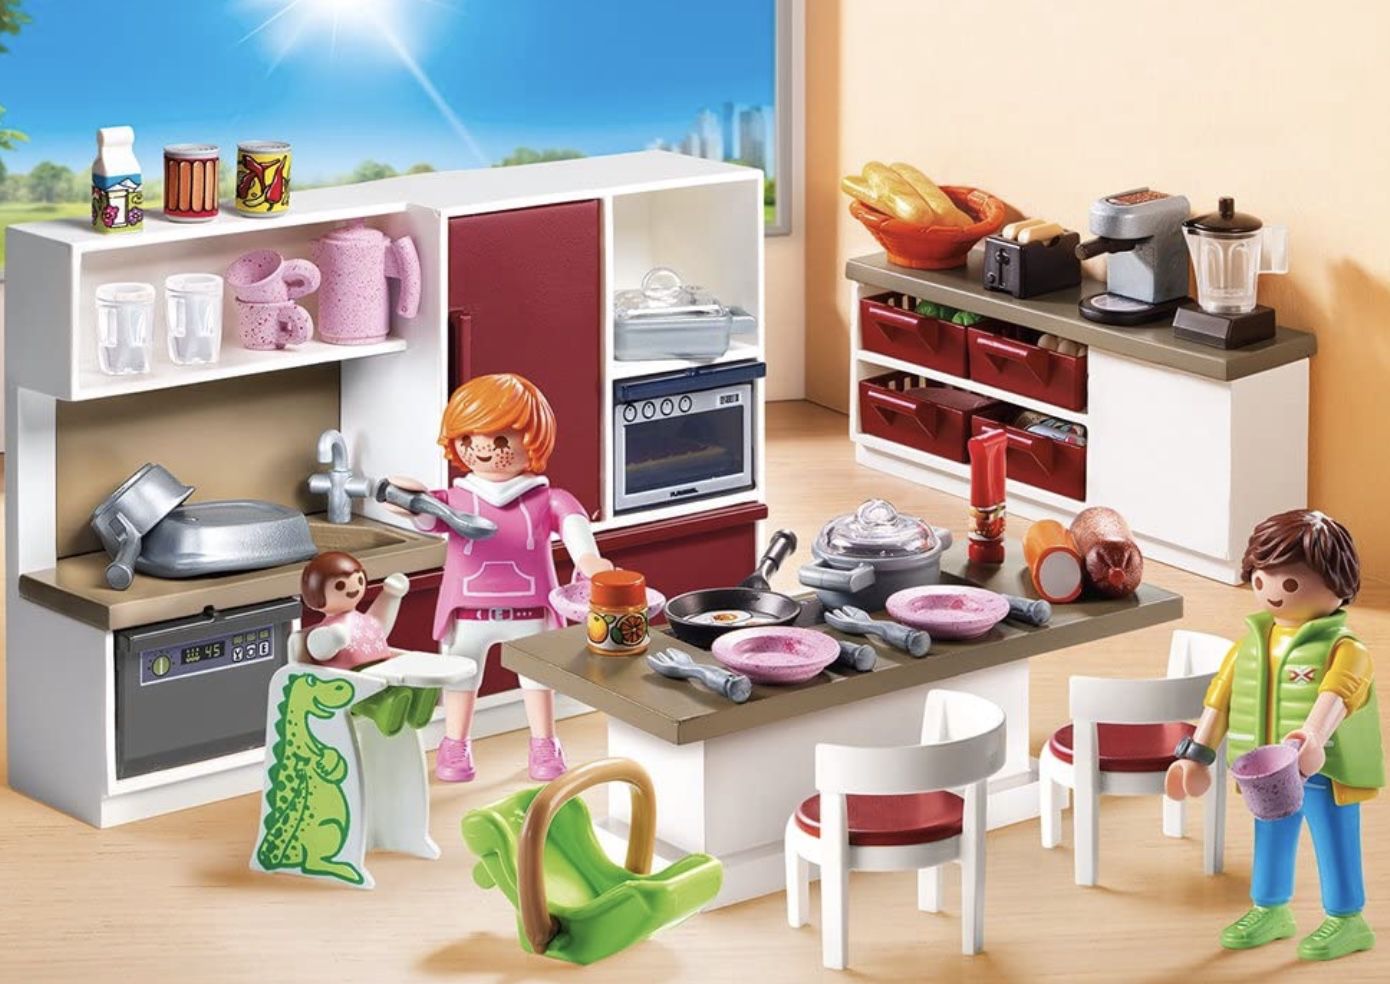 Playmobil 9269 City Life   Große Familienküche für 10,99€ (statt 20€)